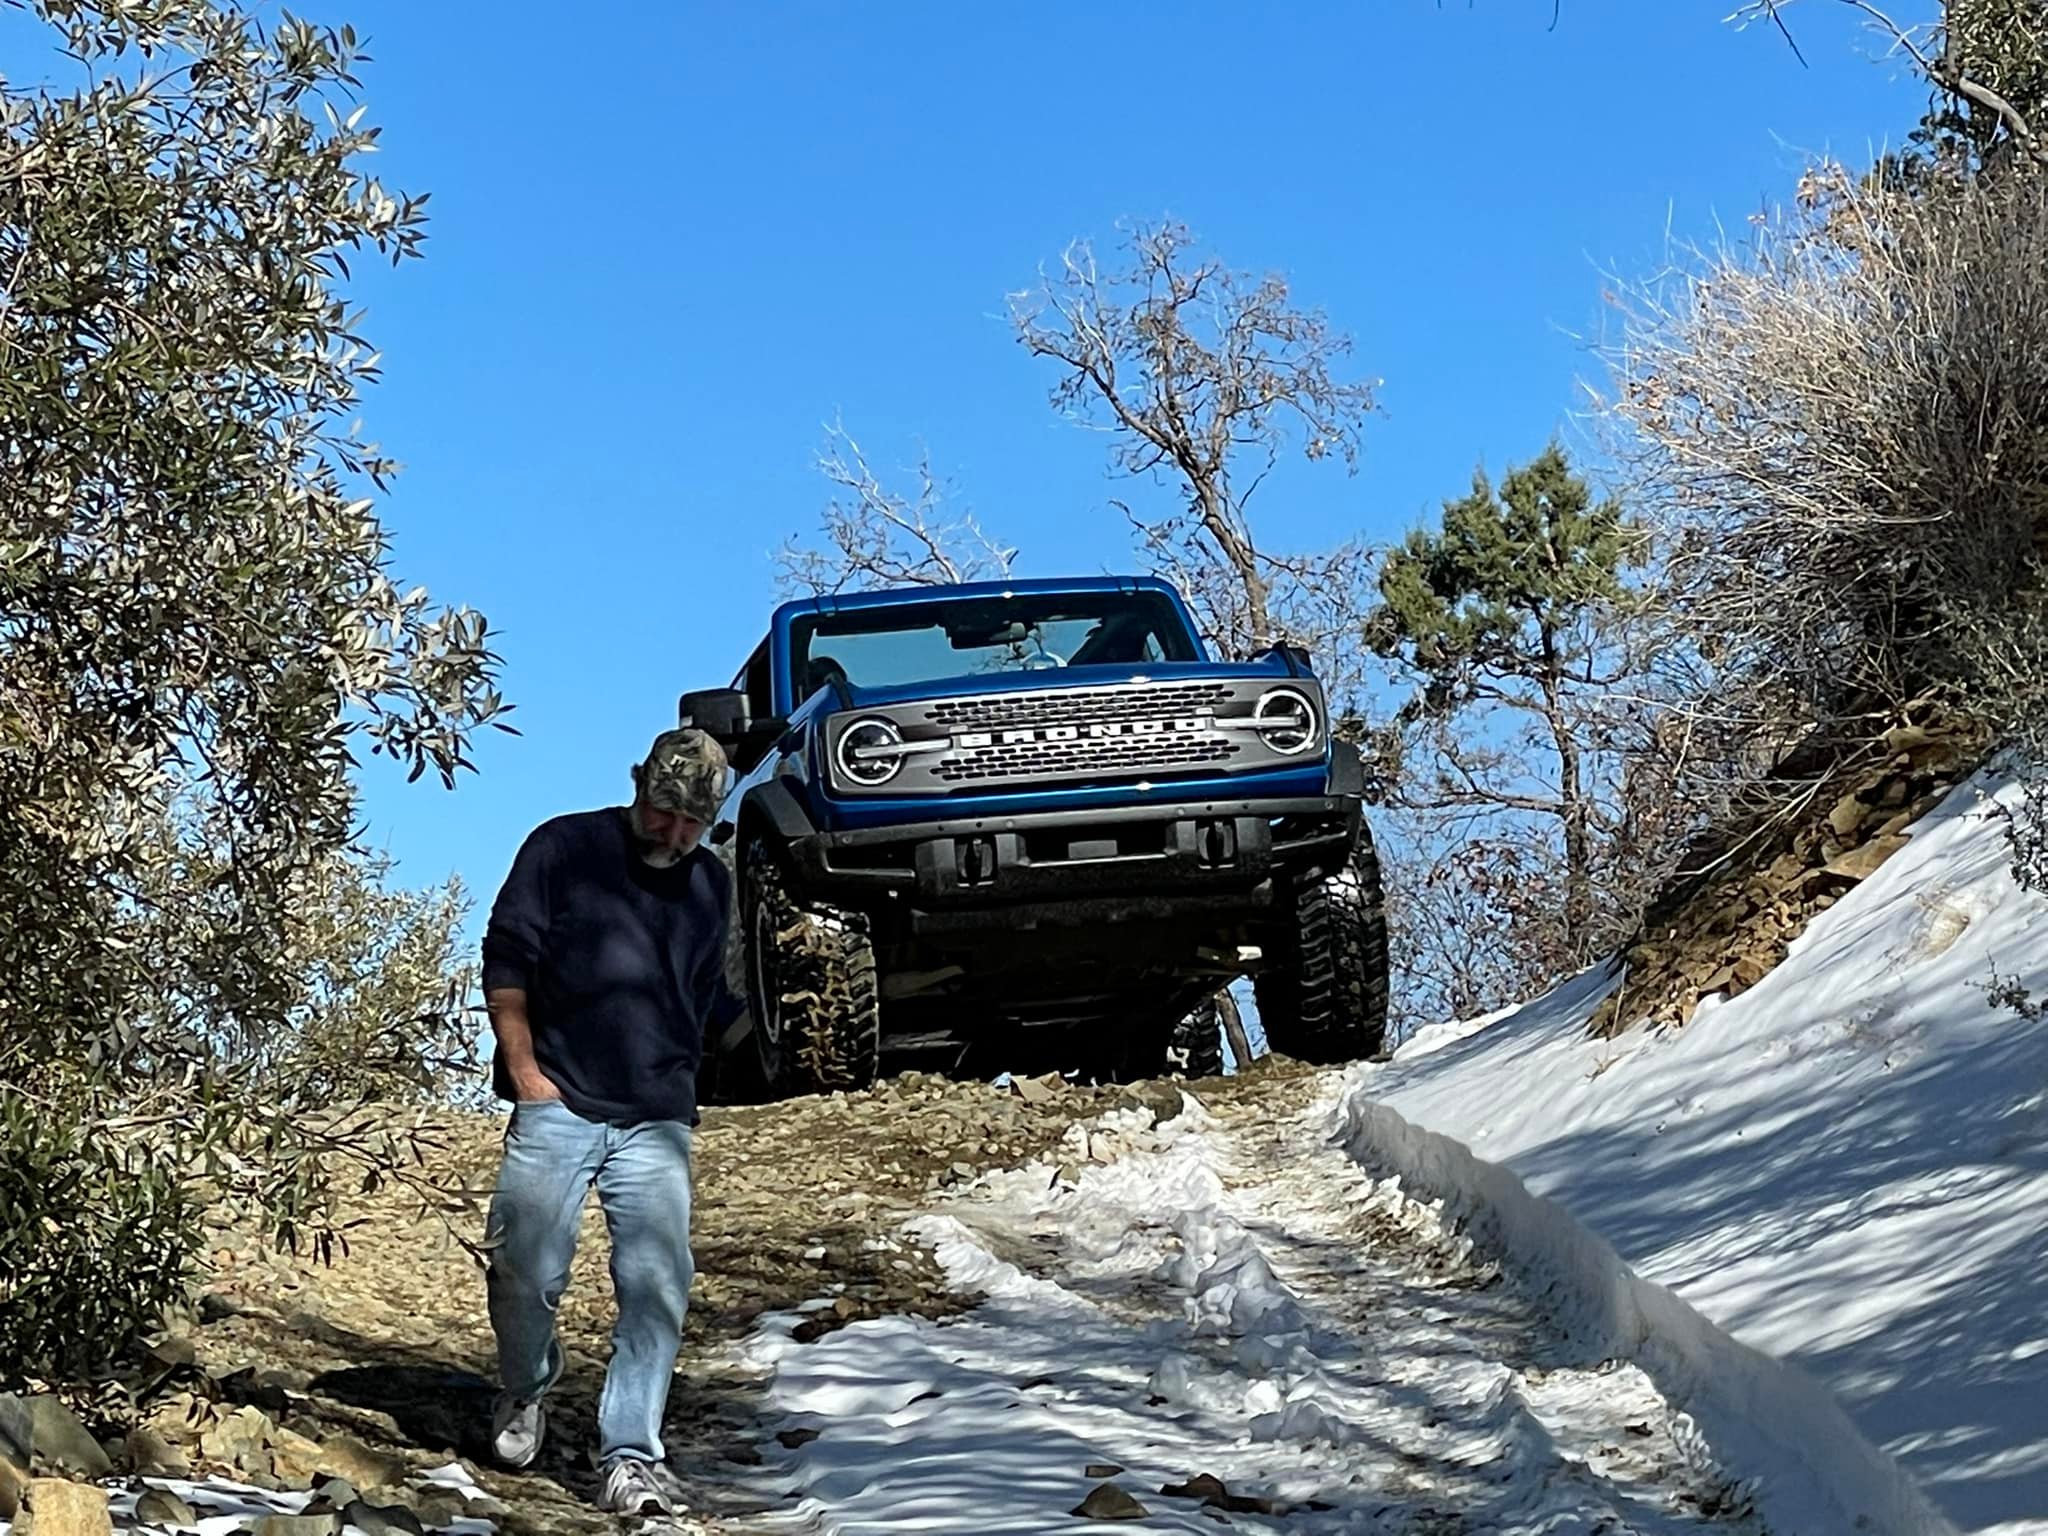 Ford Bronco Rockdawg84's Badsquach 21 Adventure and Build Thread "Wild Blue" WB Rice Peak 3